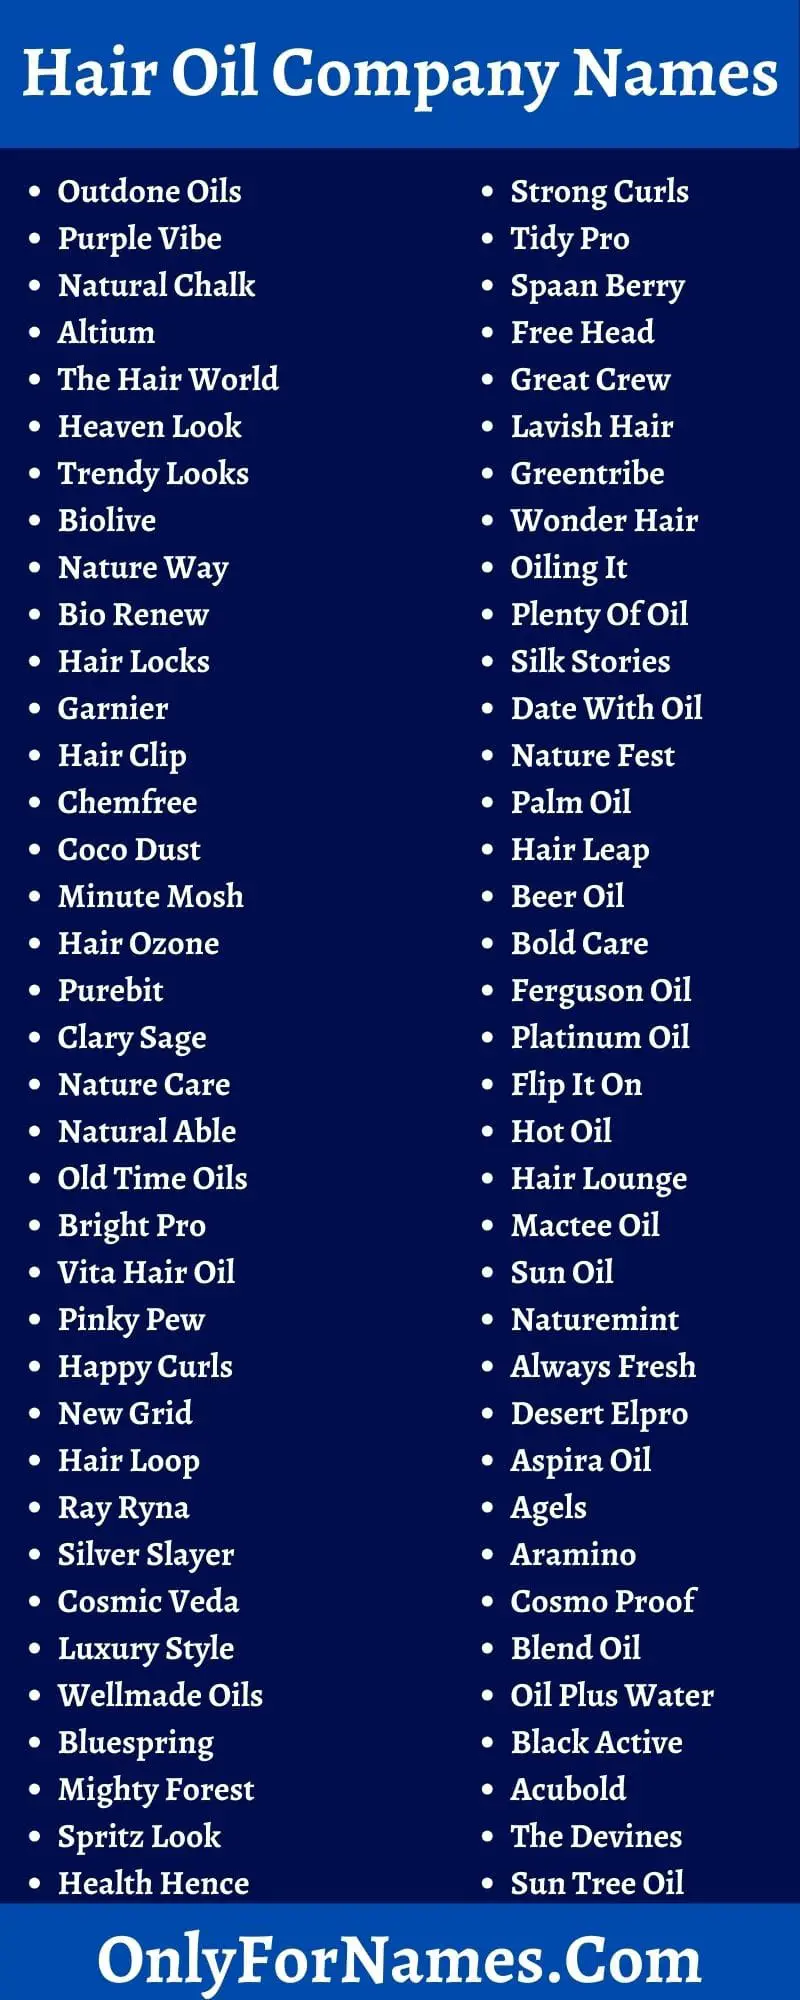 Hair Oil Company Names